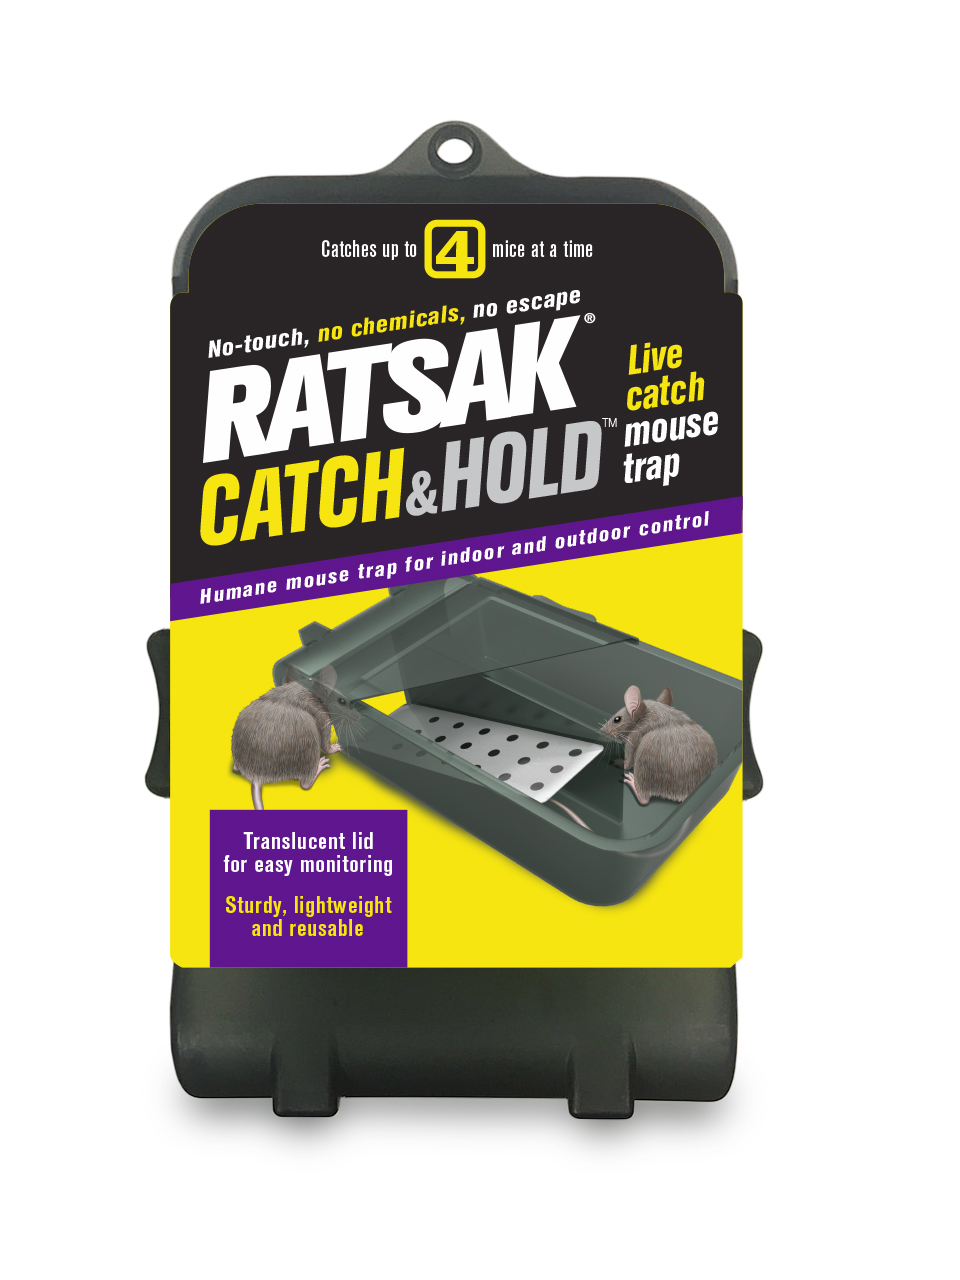 https://www.yates.com.au/media/q1hhjdrr/55448_ratsak-catch-hold-mouse-trap_fop.jpg